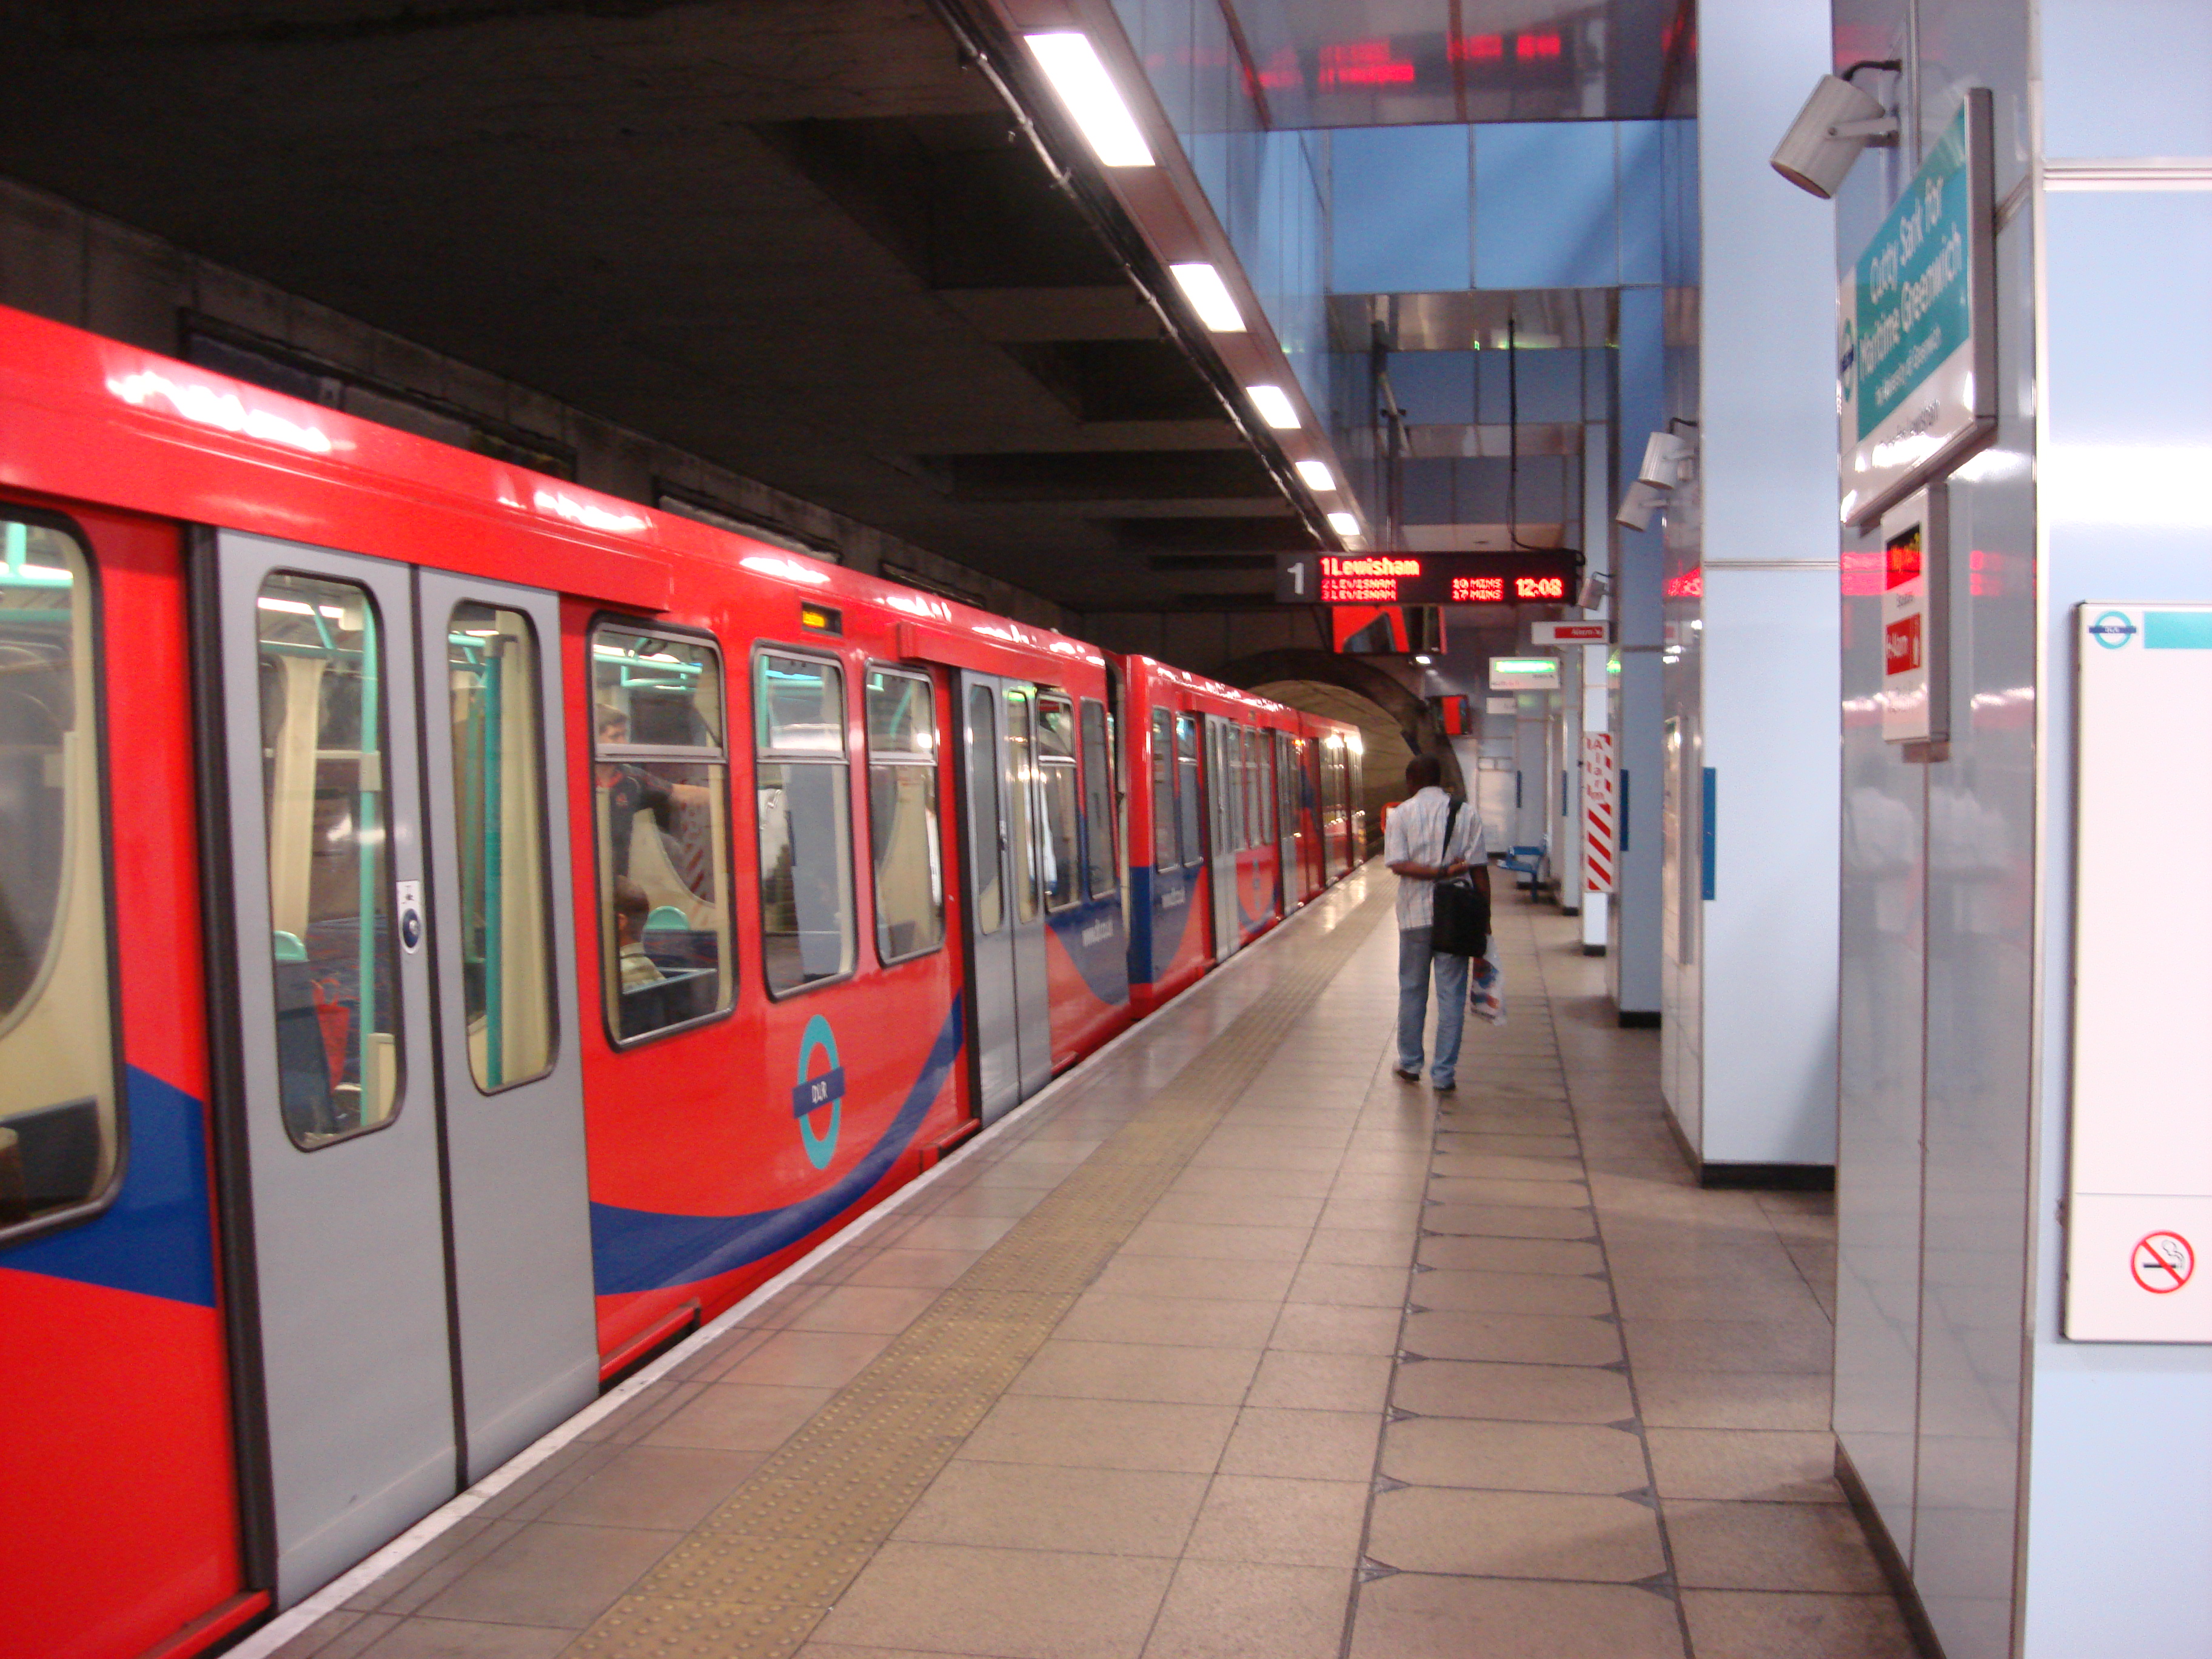 File:Cutty Sark DLR station platform 1 and train.jpg - Wikimedia Commons